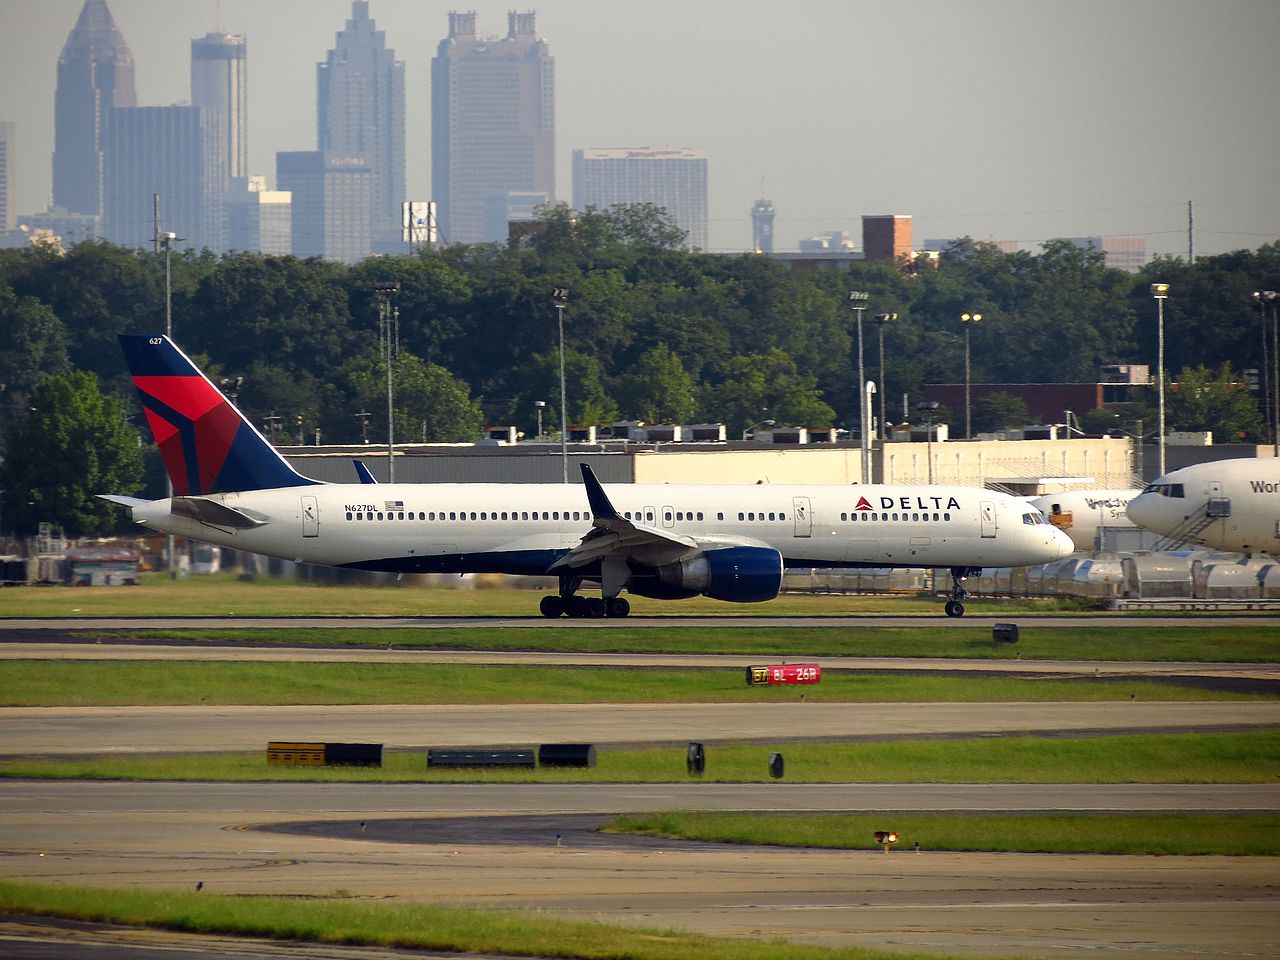 1280px-Delta_plane_and_Atlanta_skyline-1